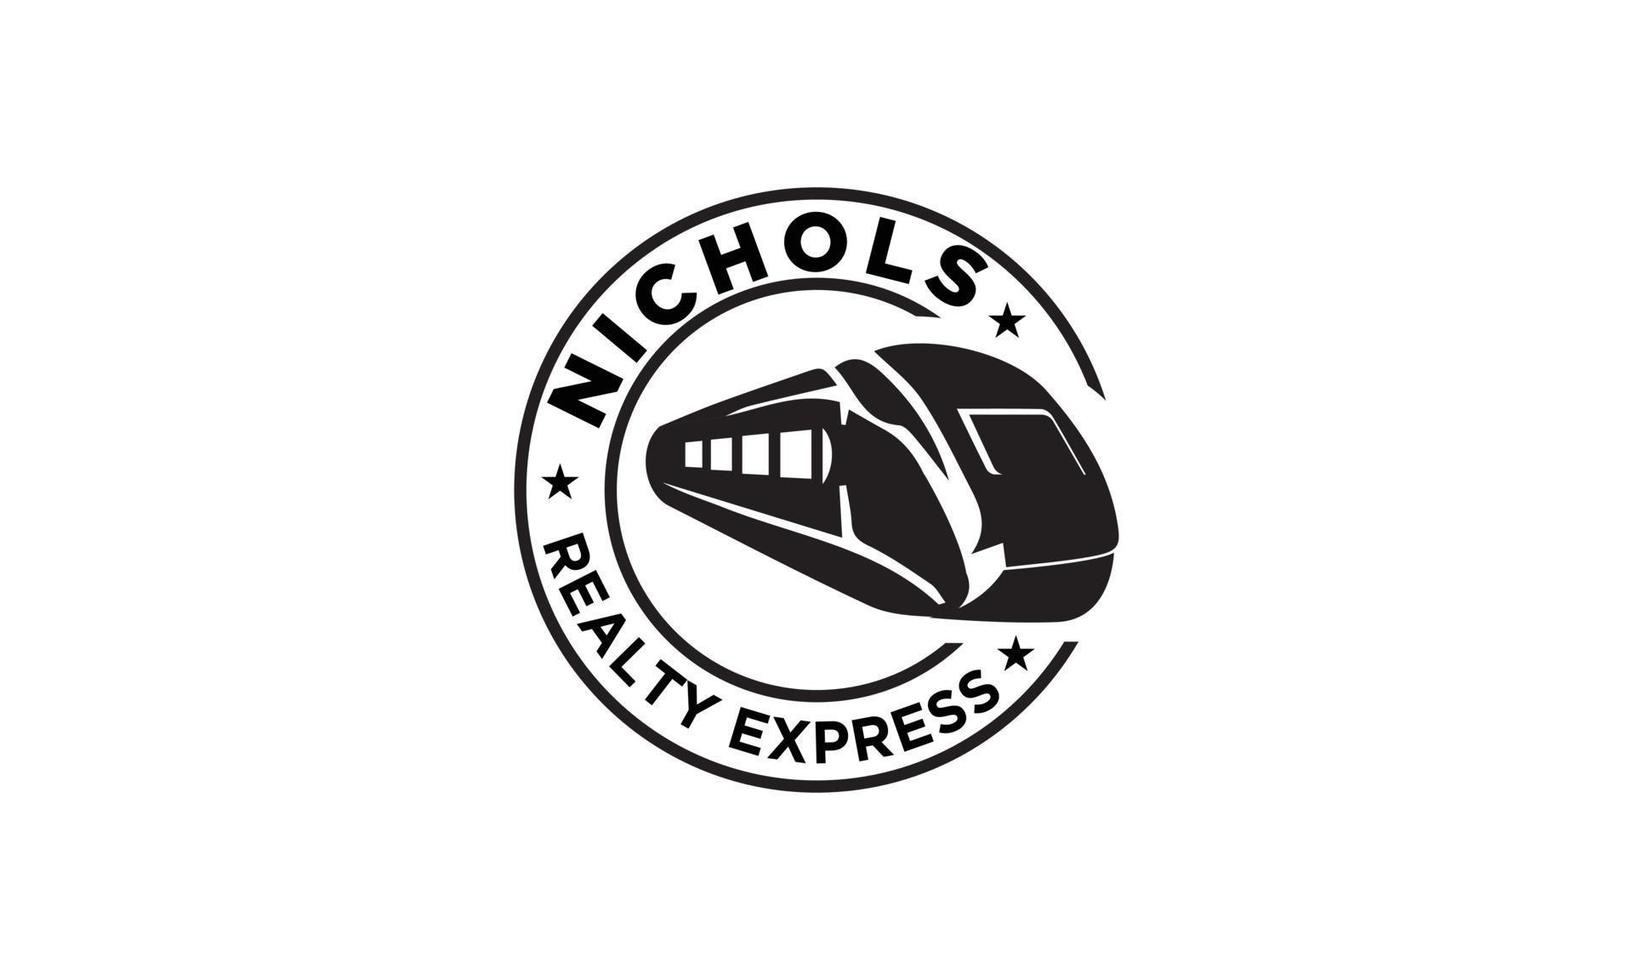 Train logo. Railway logo design. vector